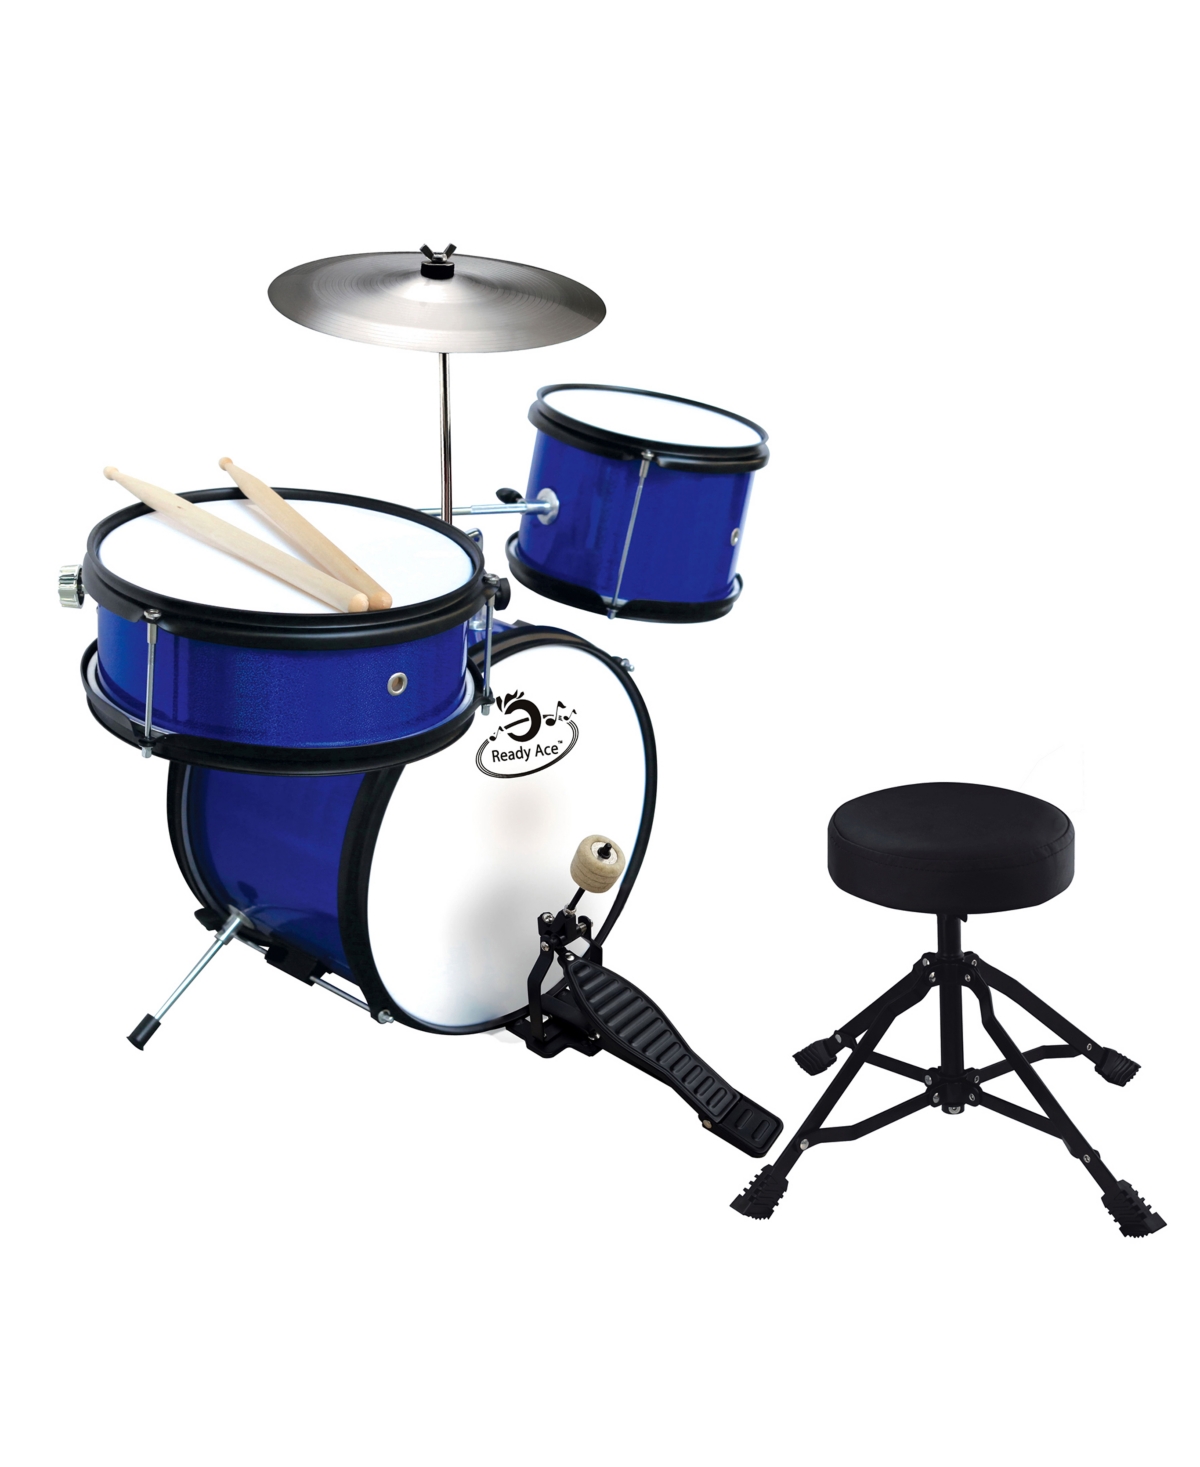 Ready Ace 5 Piece Junior Professional Drum Set In Blue